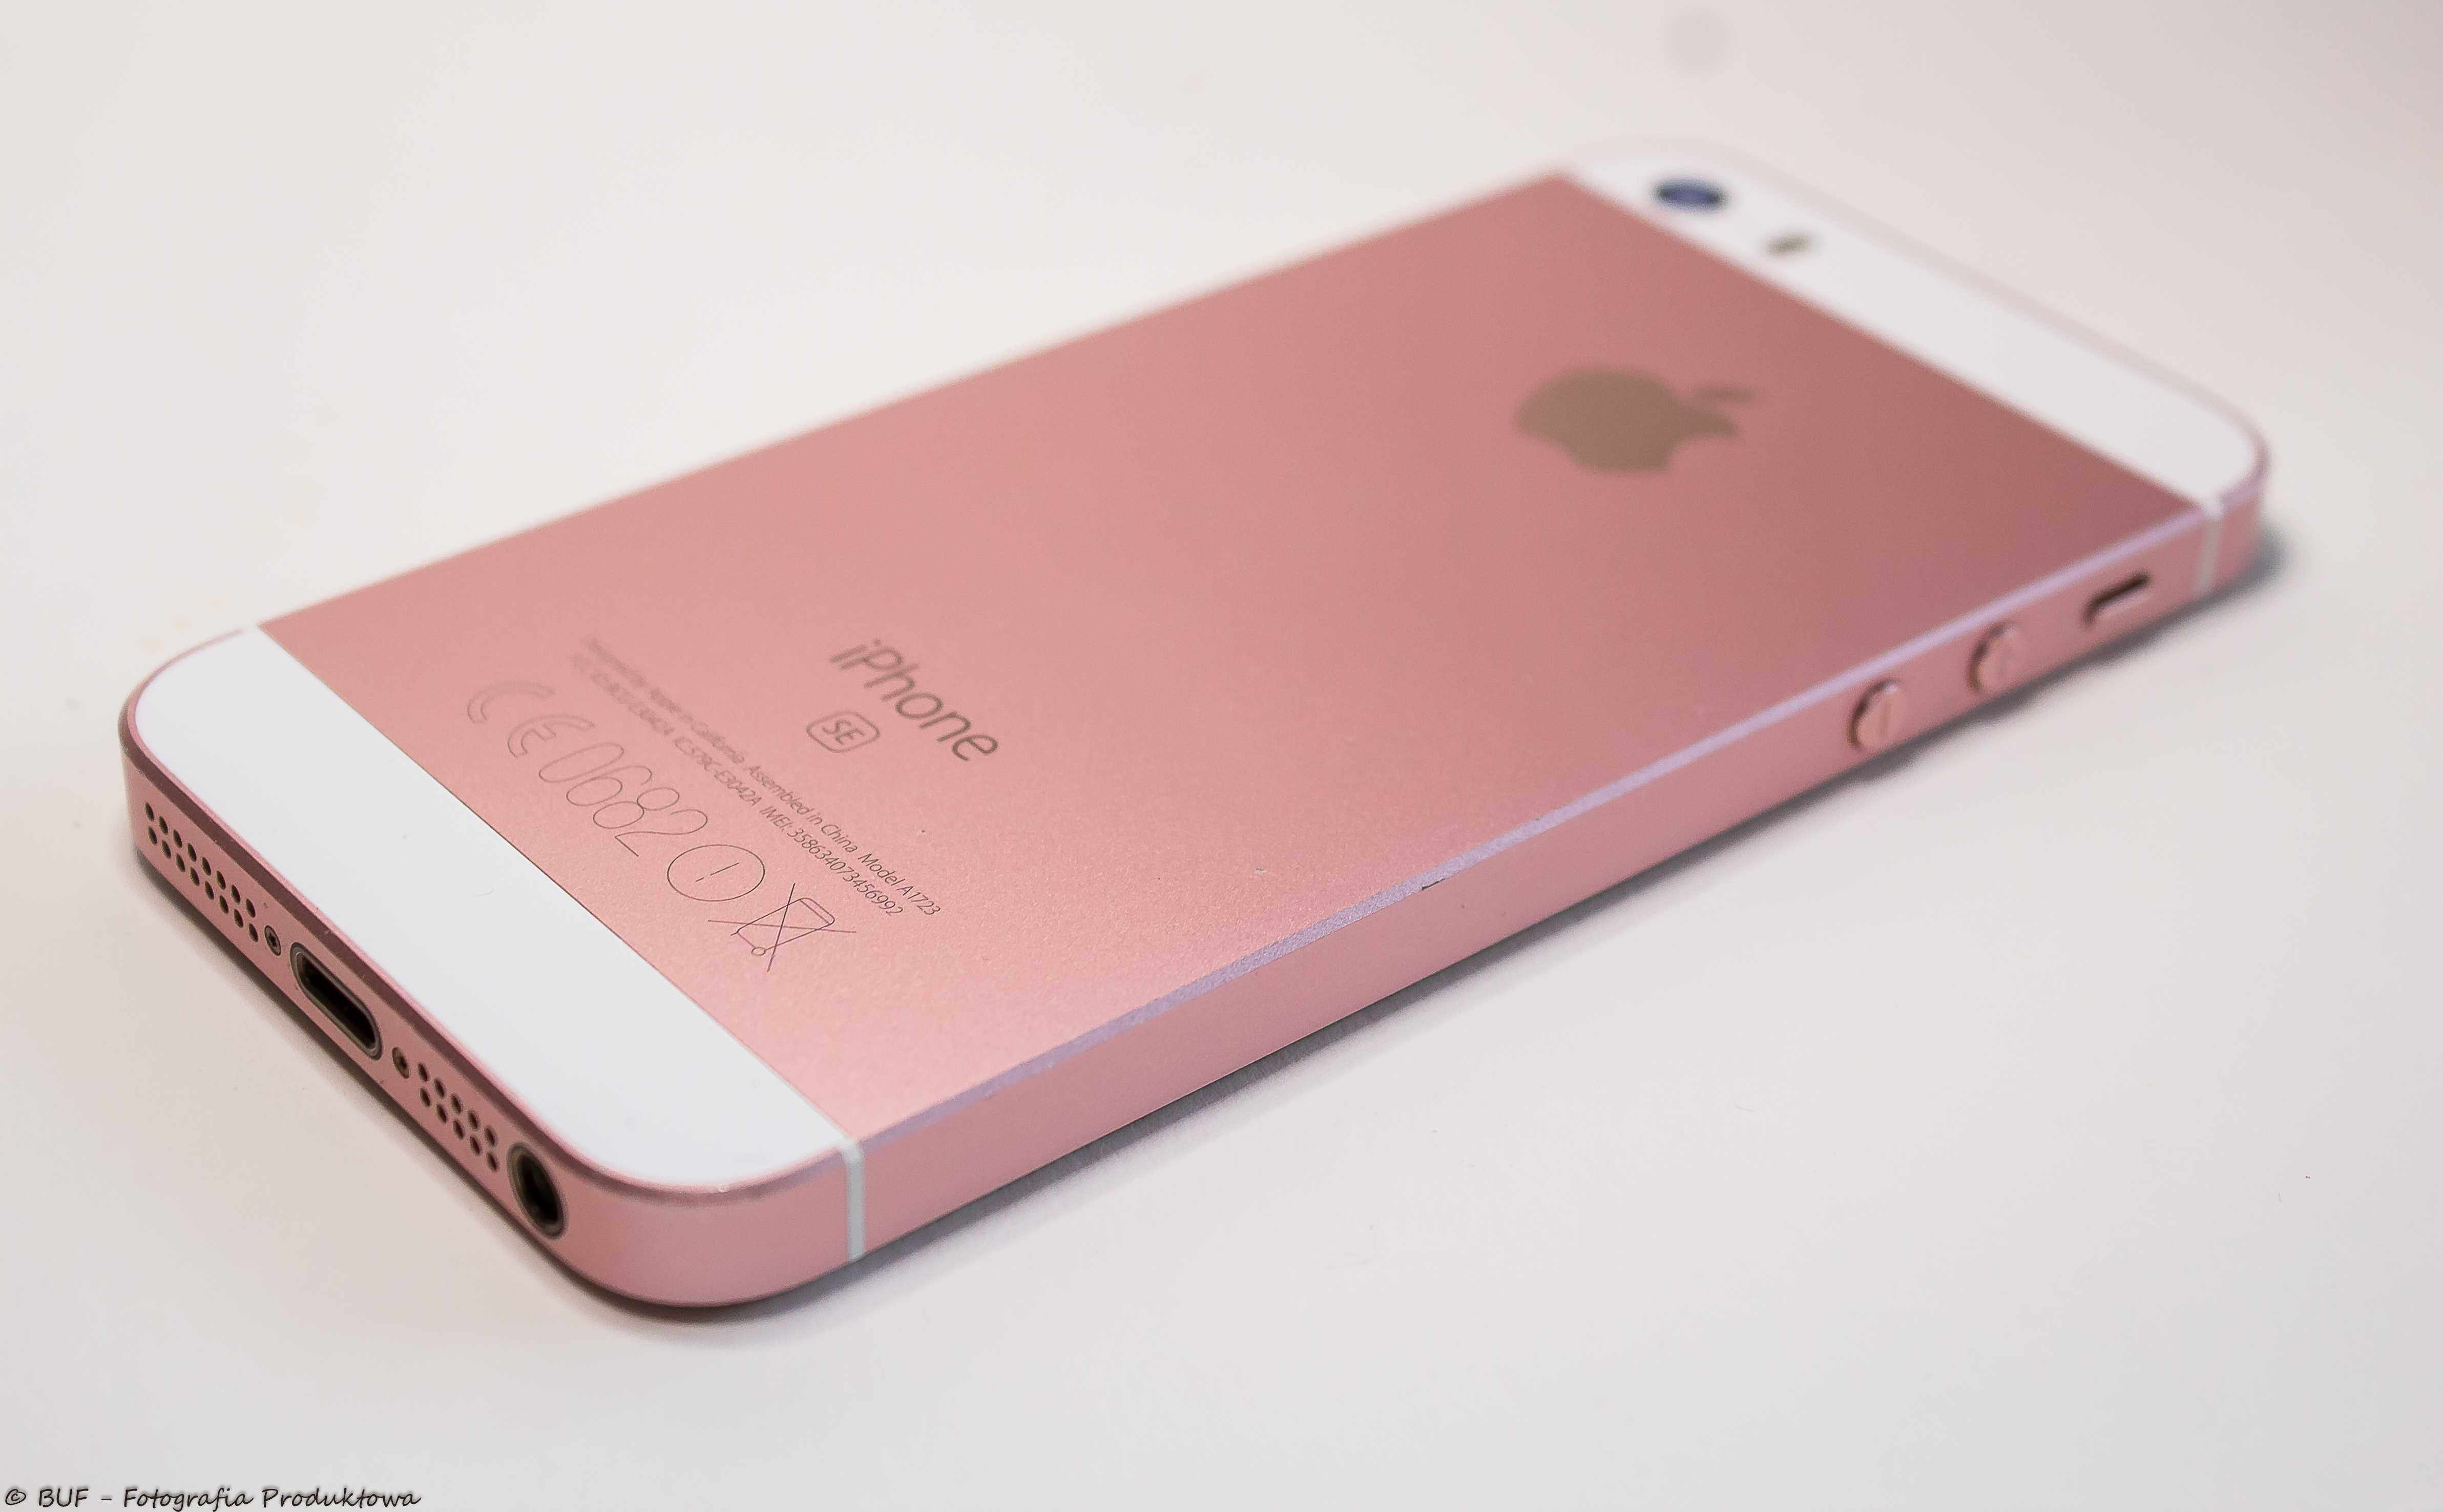 Apple iPhone SE 16 GB Rose Gold iOS 15.8.2 Różowy Limited